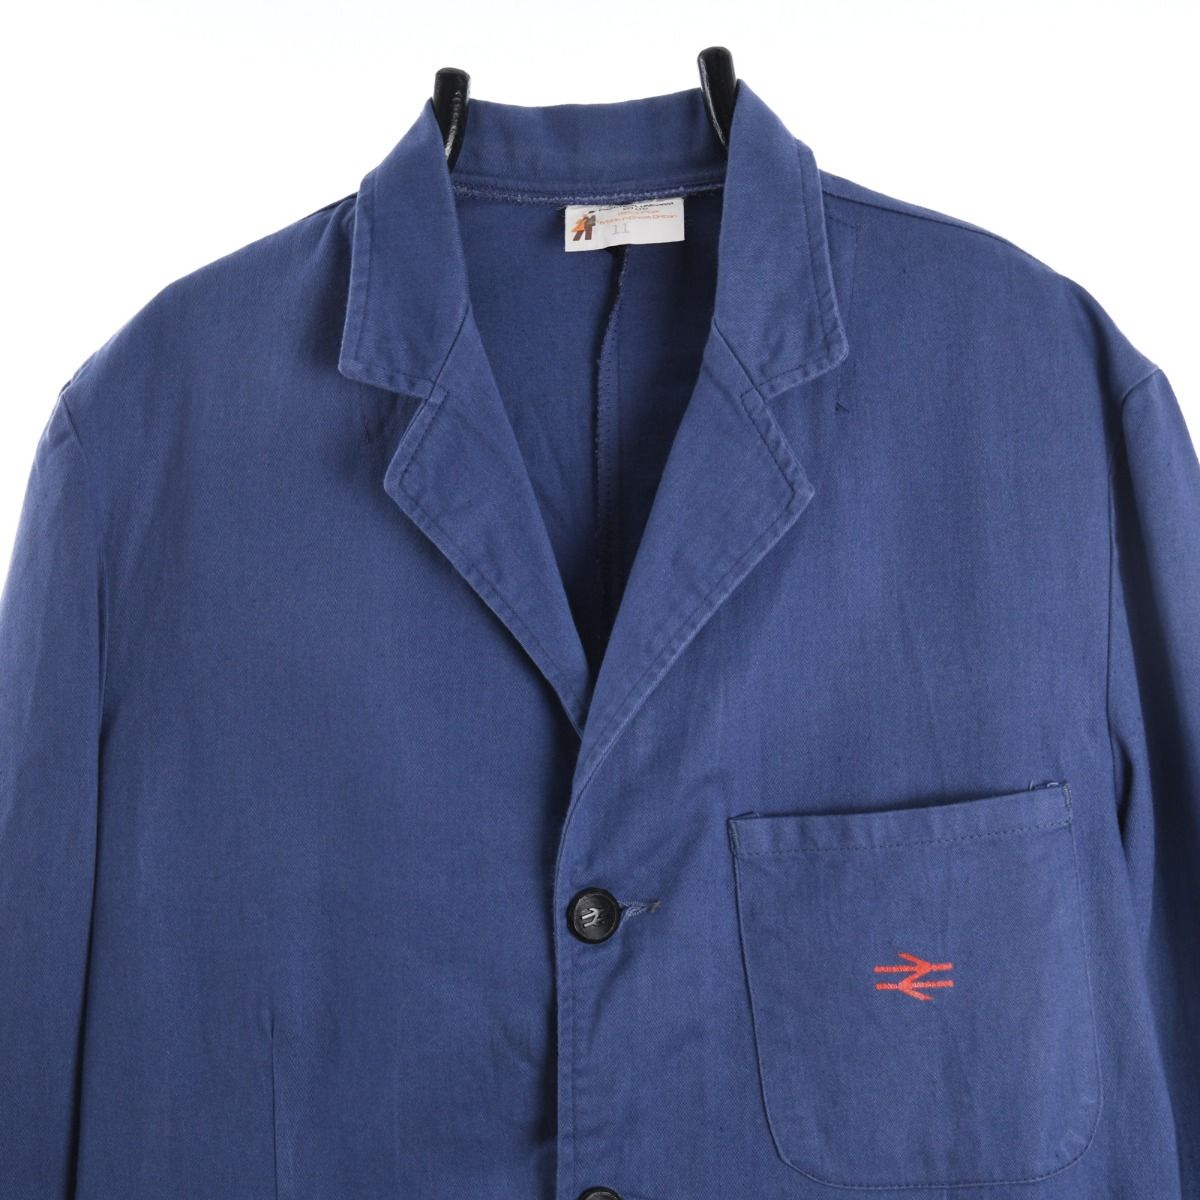 Vintage 1960s British Rail Workers Chore Jacket